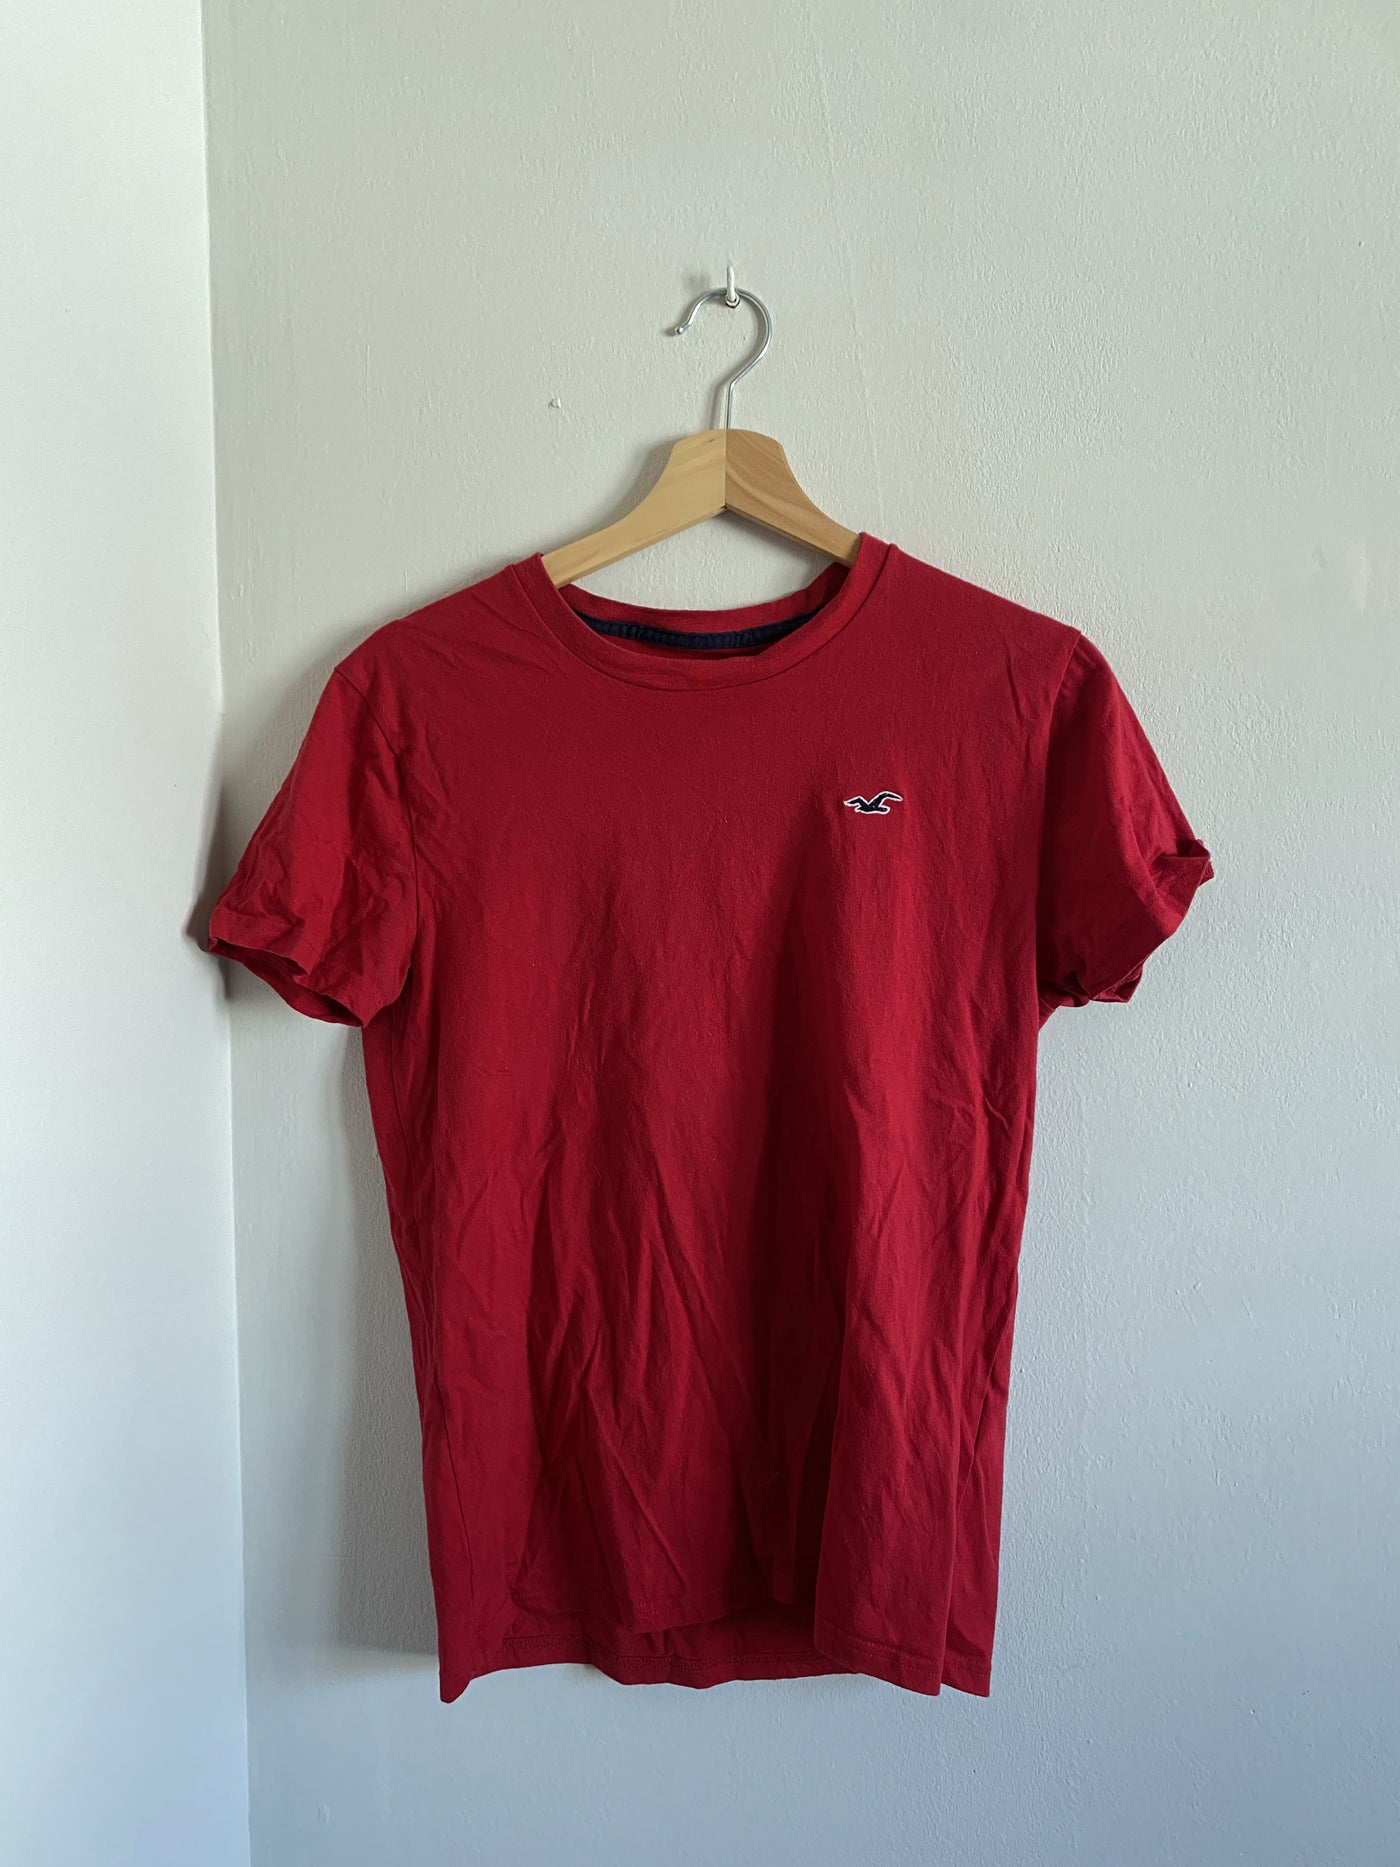 frijoles Desmantelar Reino Camiseta roja de segunda mano – it.closet